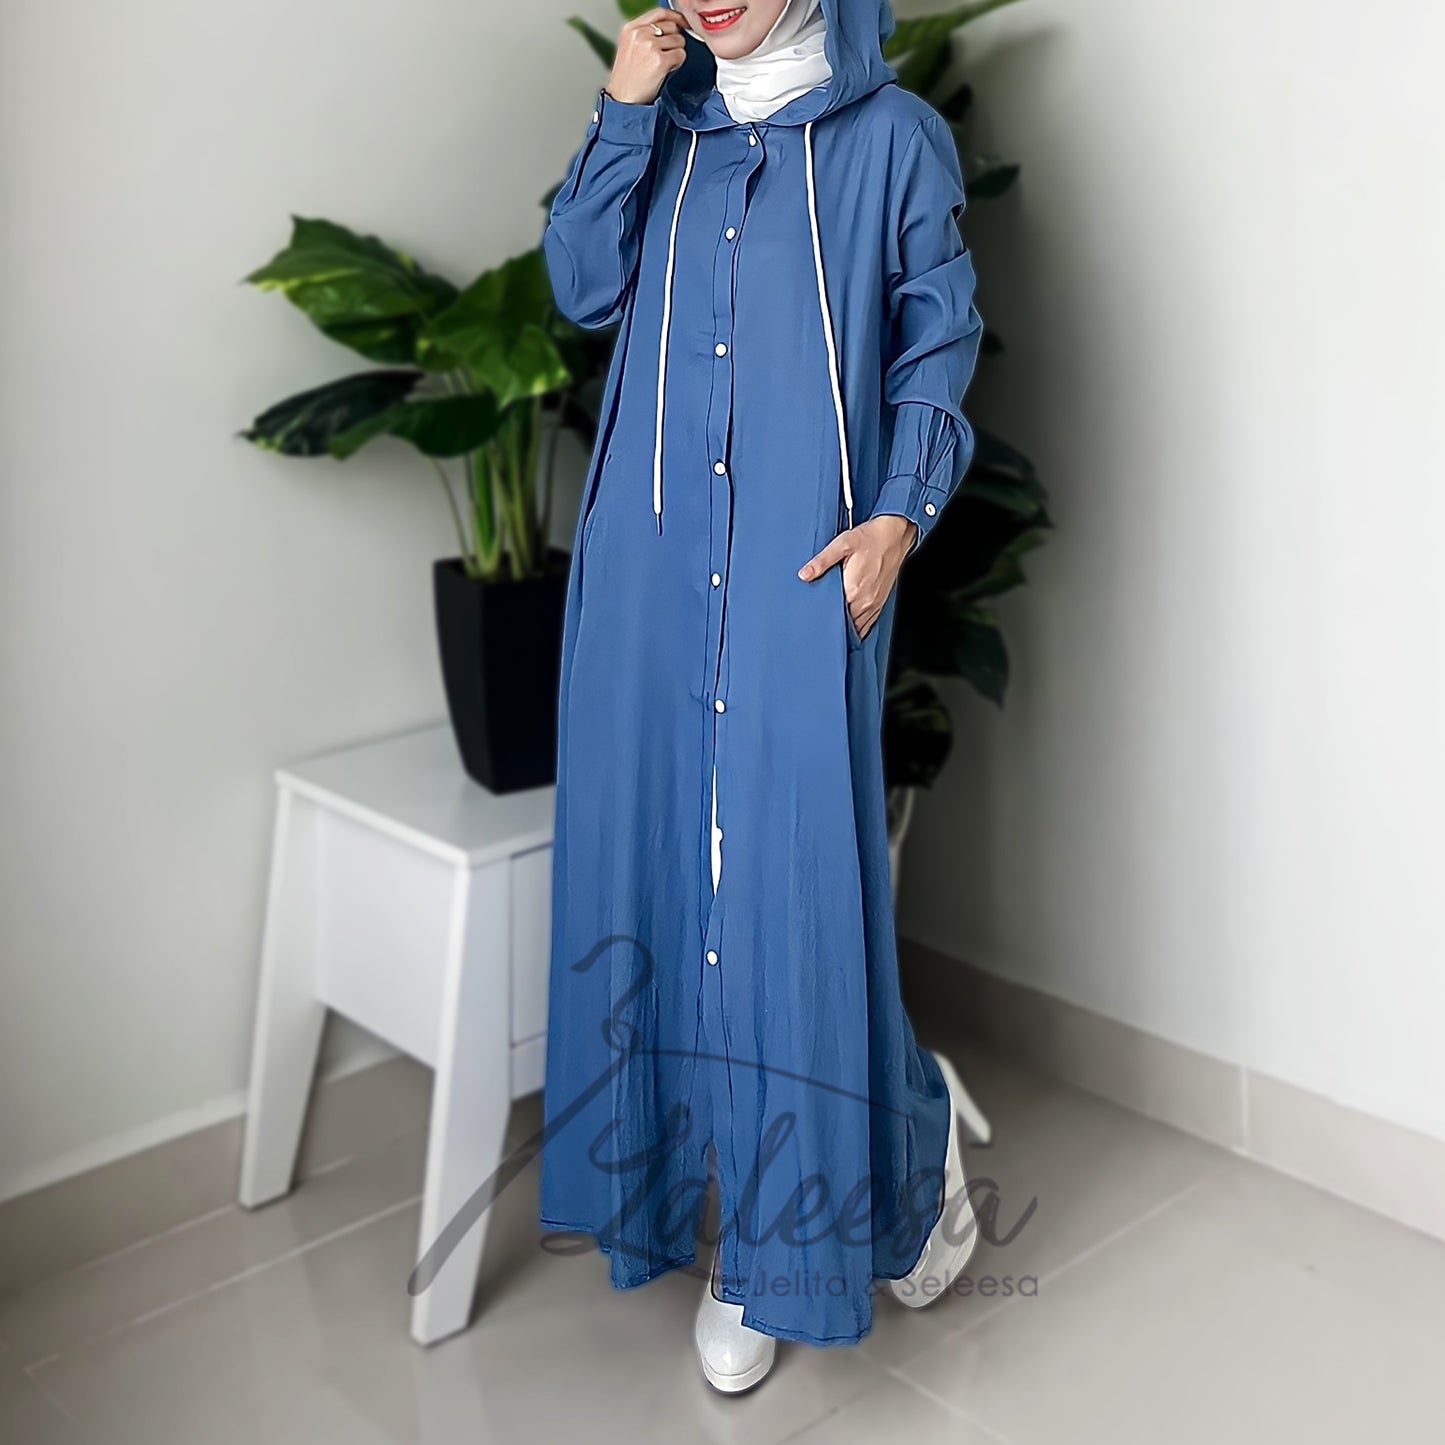 LALEESA LD255253 Jeans Hooded Hoodie Dress Long Dress Muslimah Dress Women Dress Maxi Dress Abaya Muslimah Baju Muslimah